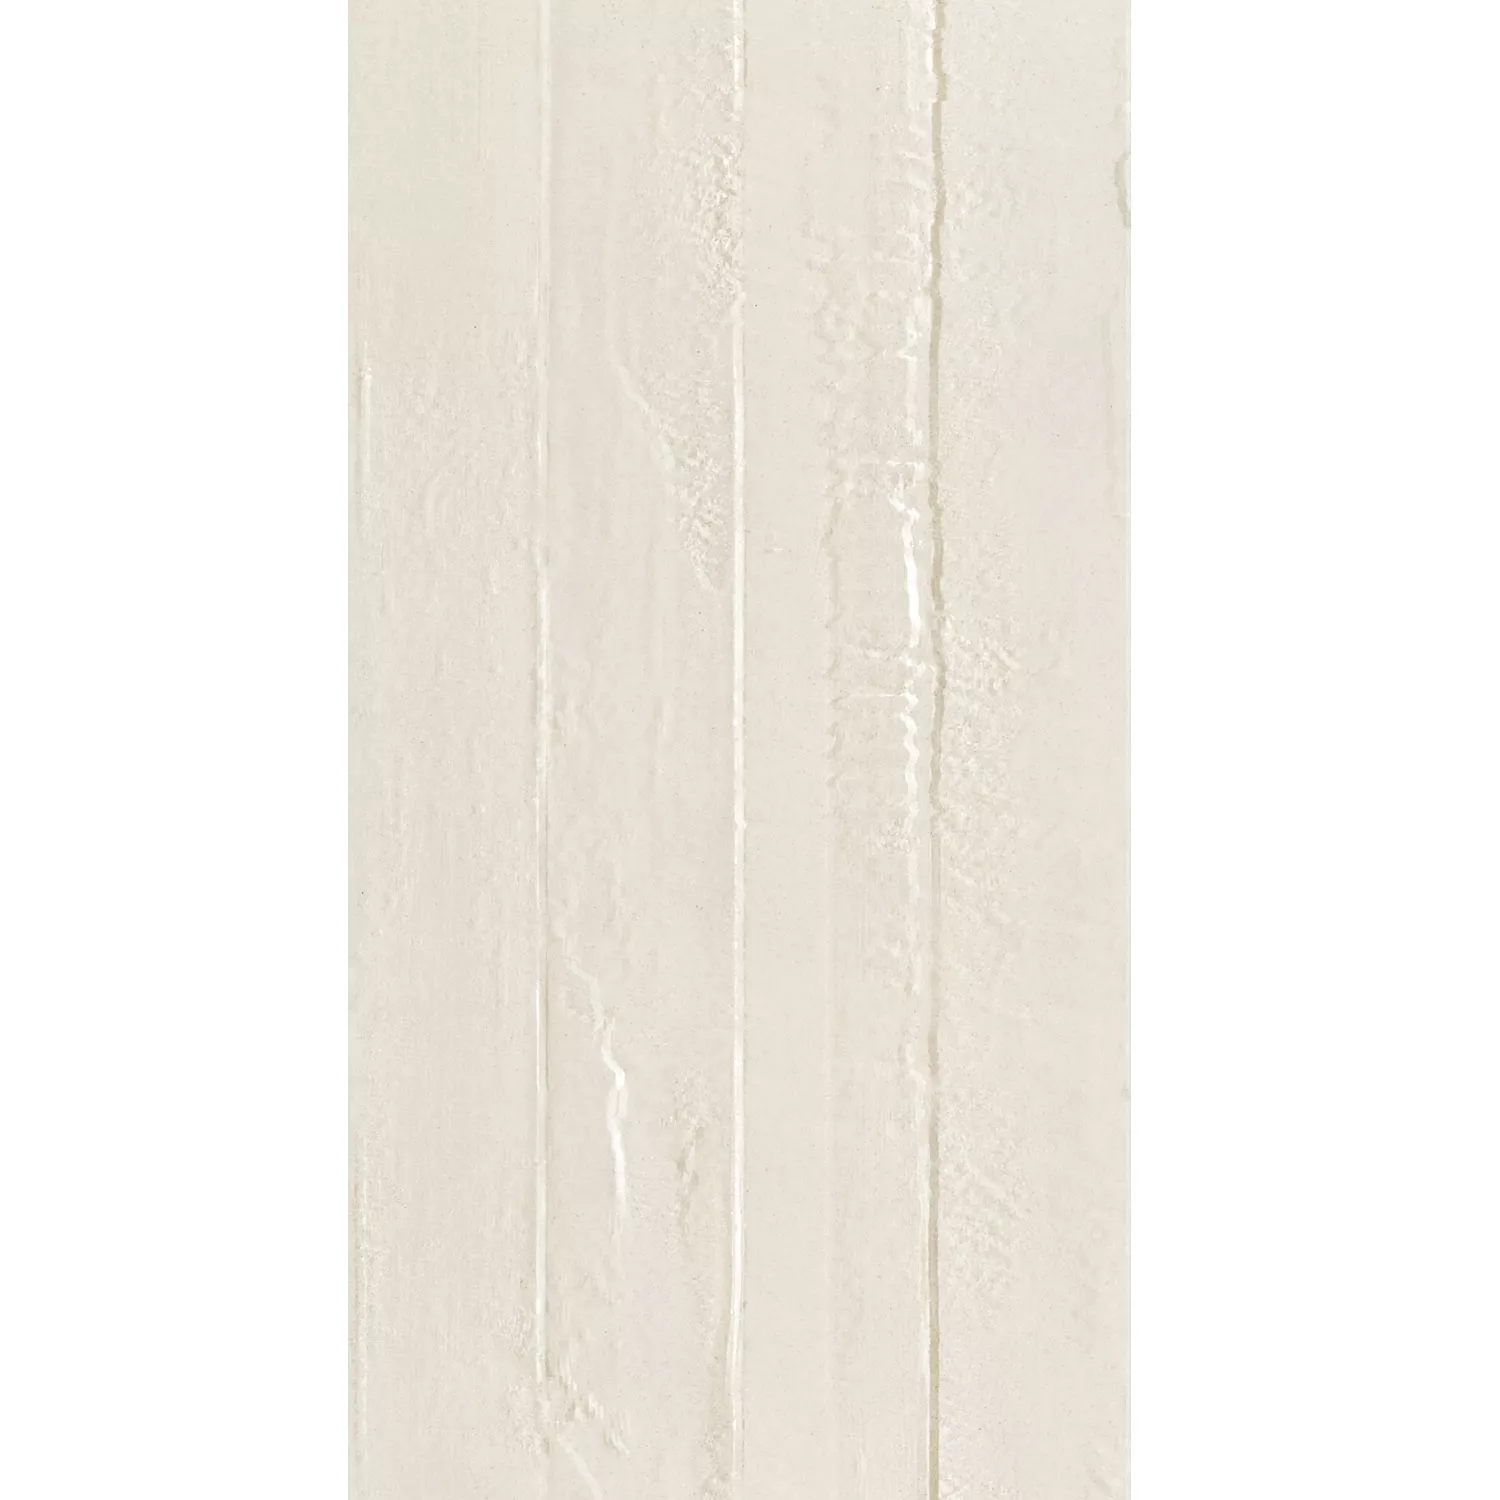 Bodenfliese Steinoptik Lobetal Ivory 45x90cm